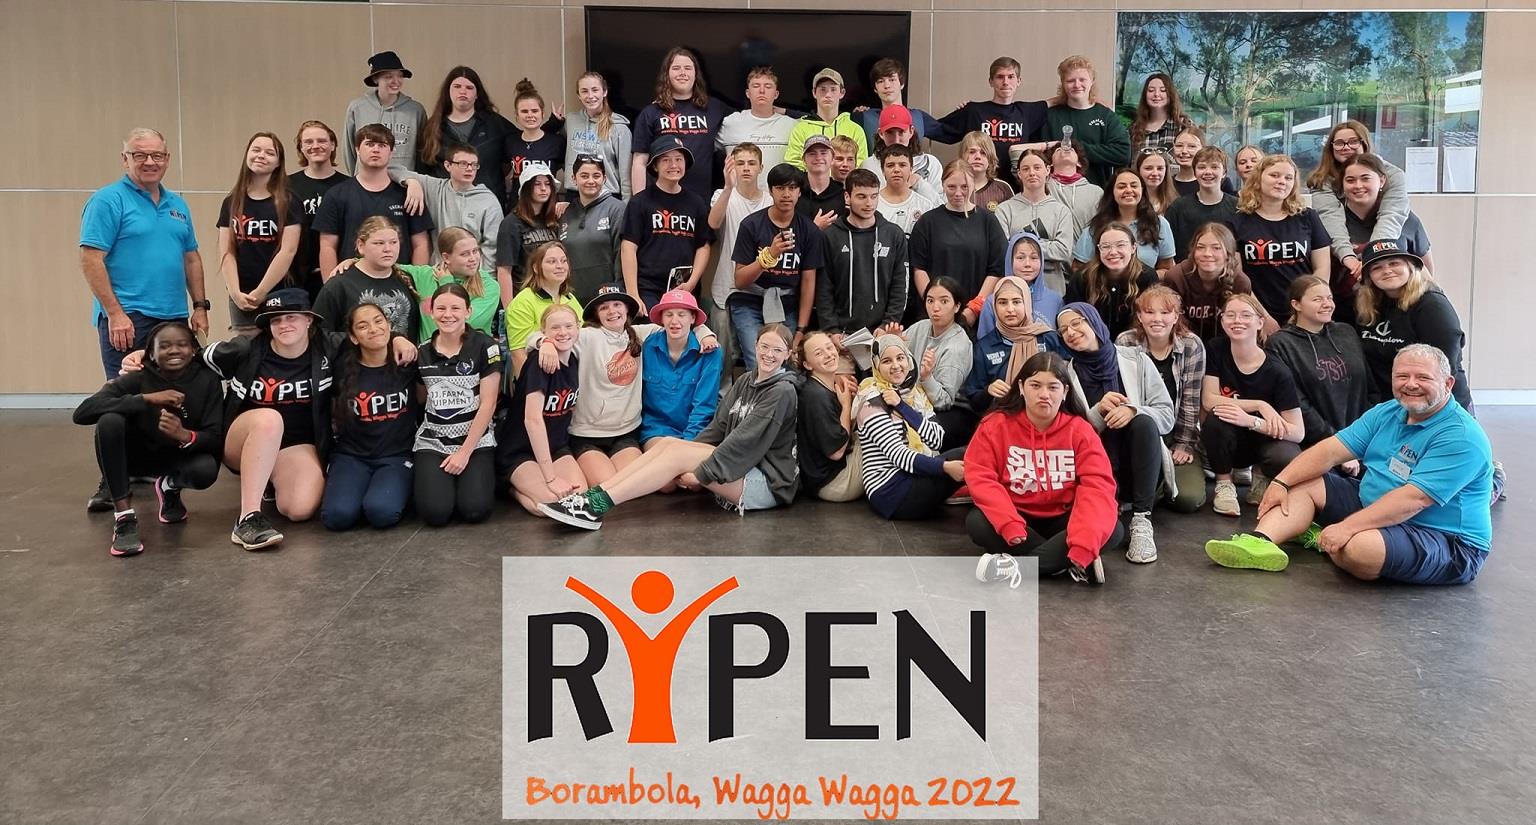 The RYPEN team